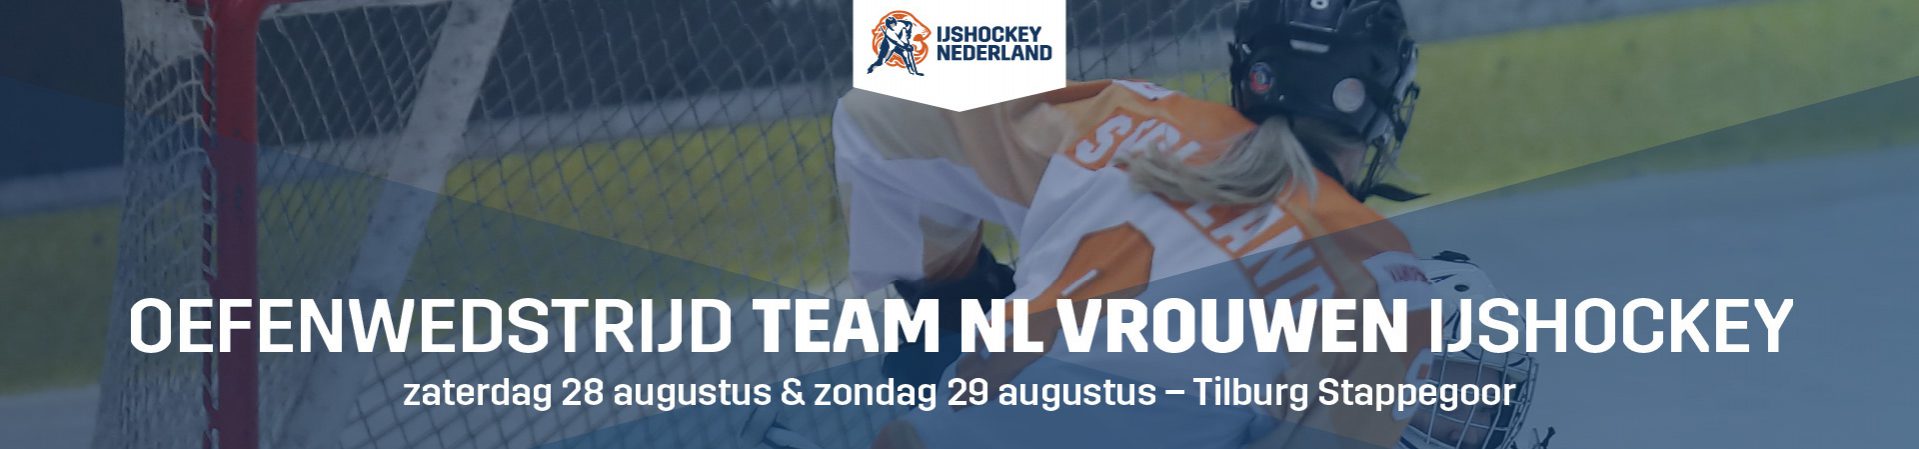 Oefenwedstrijden ijshockey Team NL Vrouwen